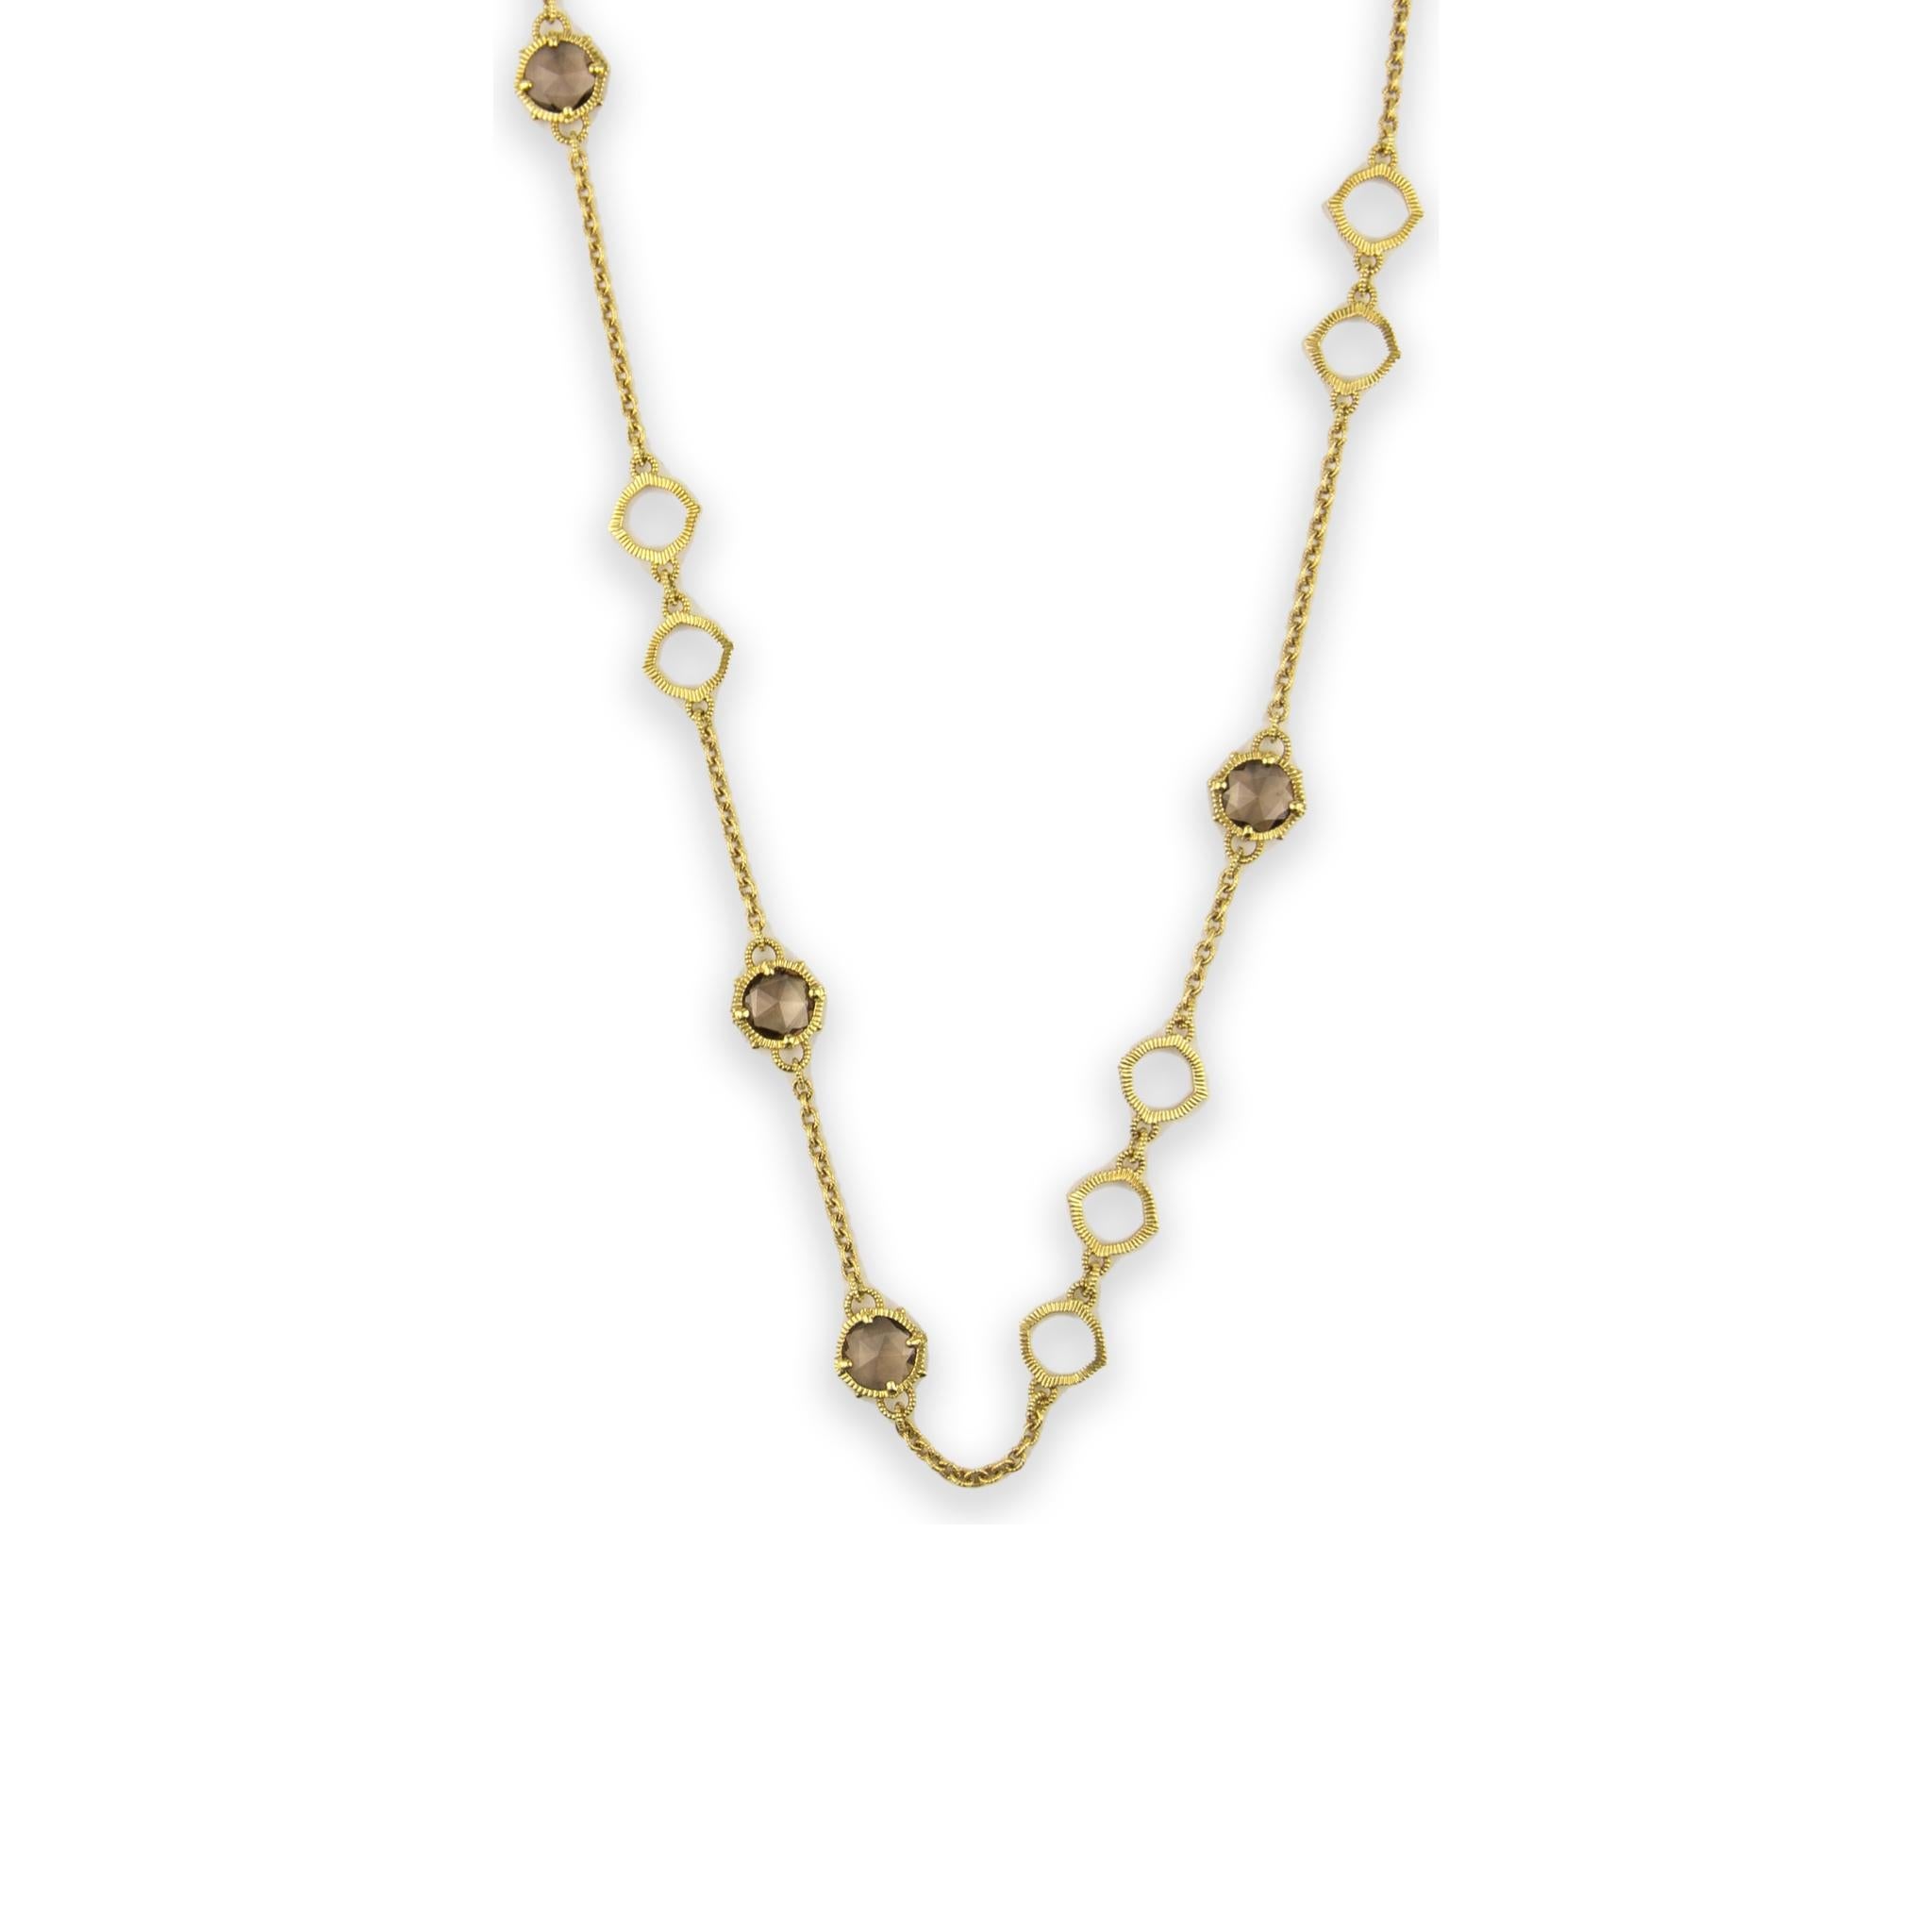 Judith Ripka 18K Yellow Gold Necklace
Quartz: 8.40ctw
SKU: JR01022
Retail price: $7,560.00